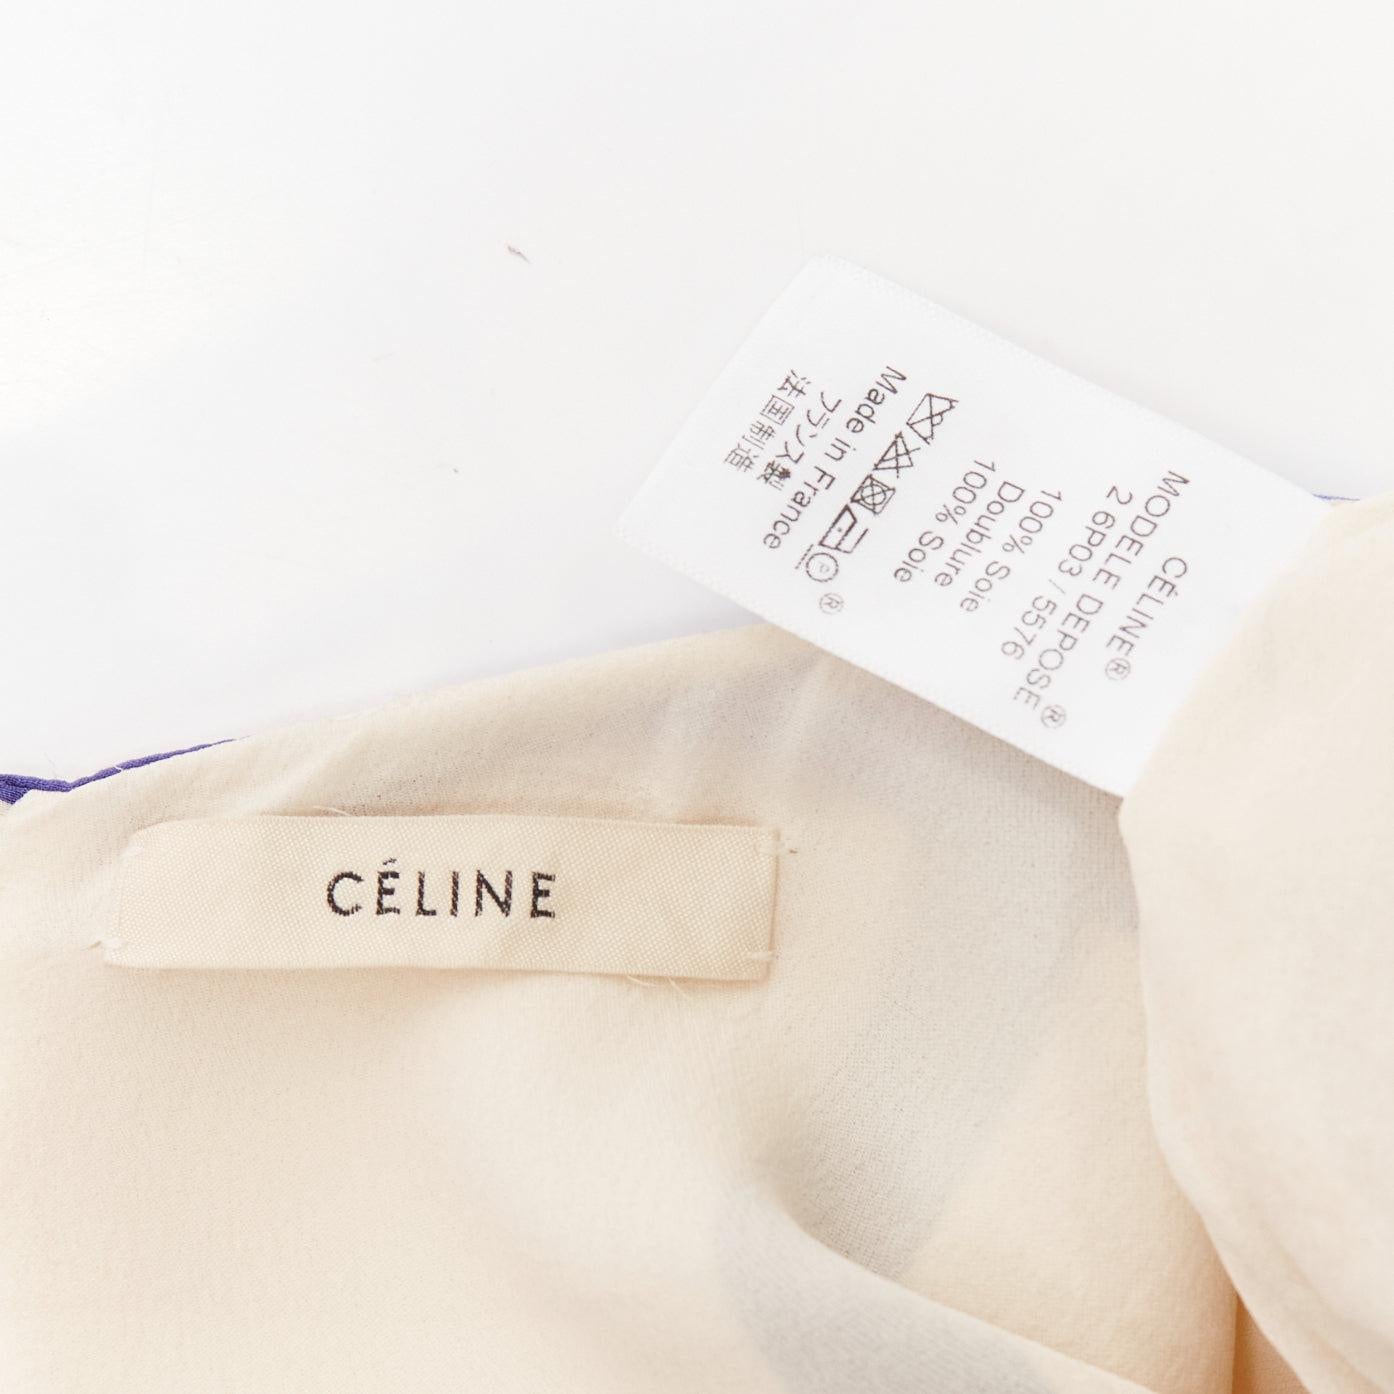 CELINE Phoebe Philo 2014 Runway cream blue 100% silk bias cut dress For Sale 5